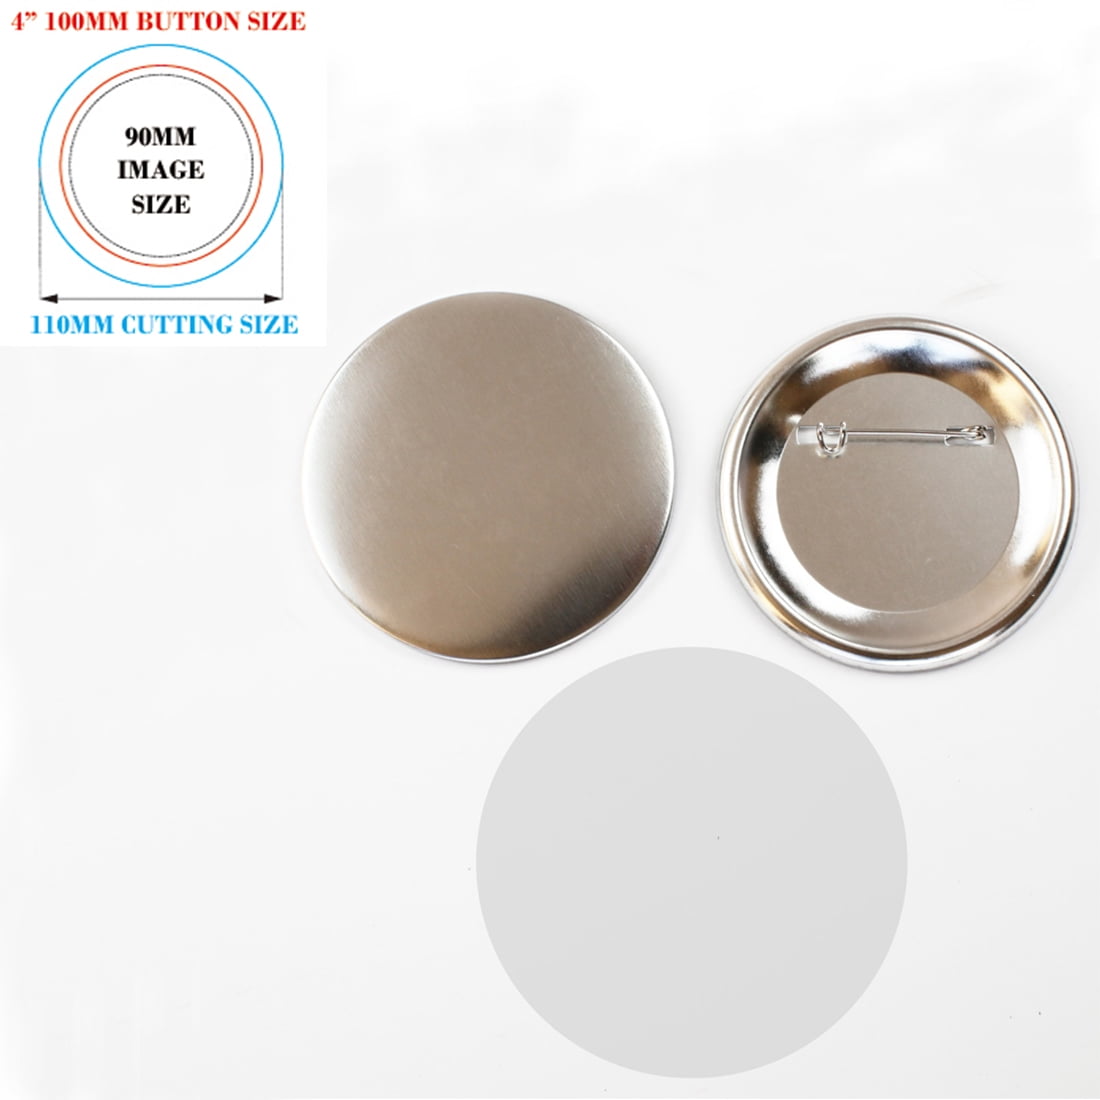 100 Random Pin Back Button Pins - Bulk Resale Wholesale Lot - 1” (One Inch)  Mini